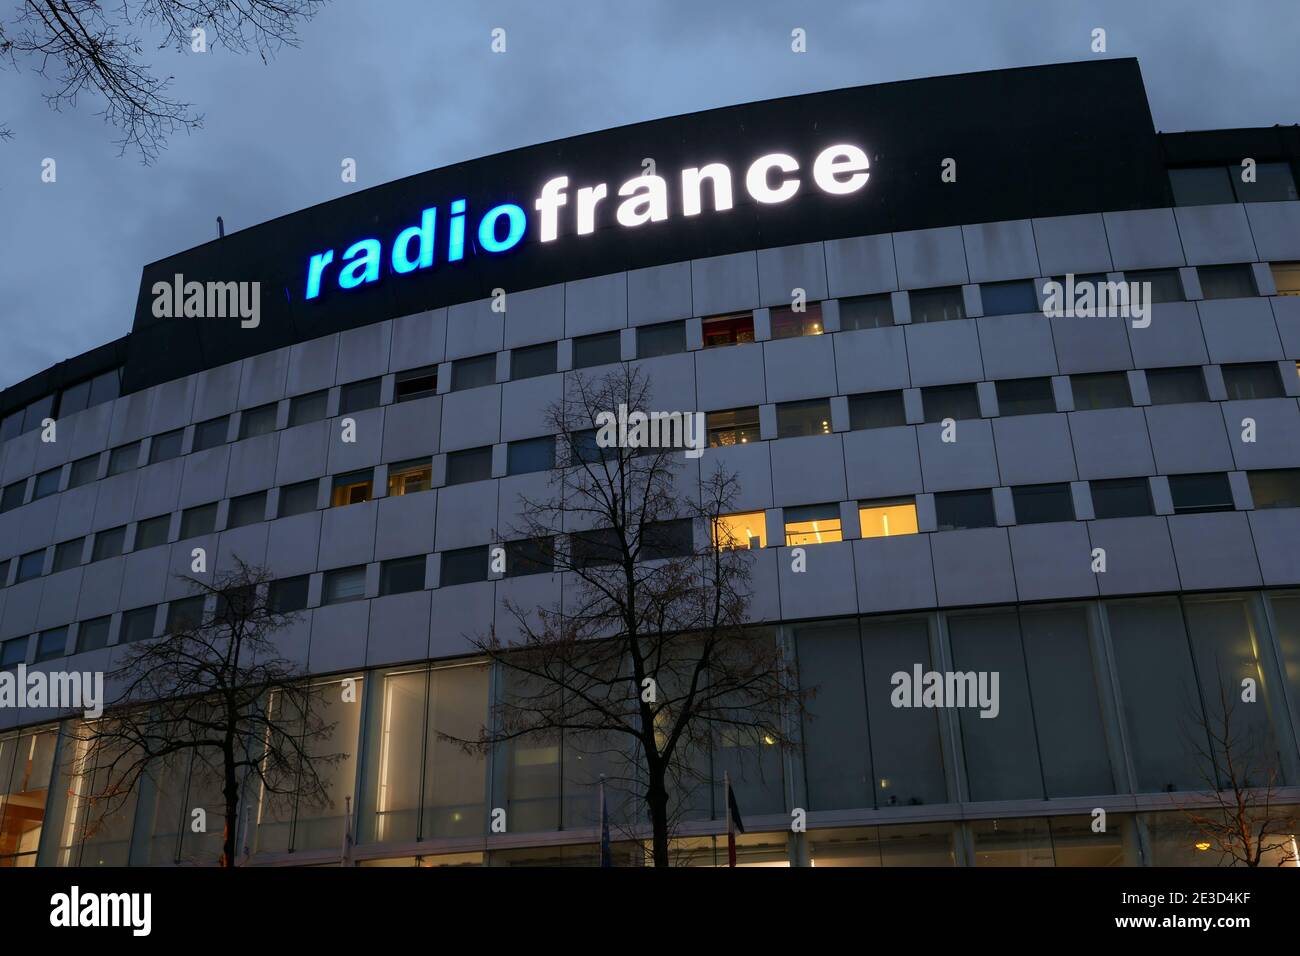 Parigi, Francia. Gennaio 17. 2021. Vista dell'edificio radio France situato lungo la Senna. Foto Stock